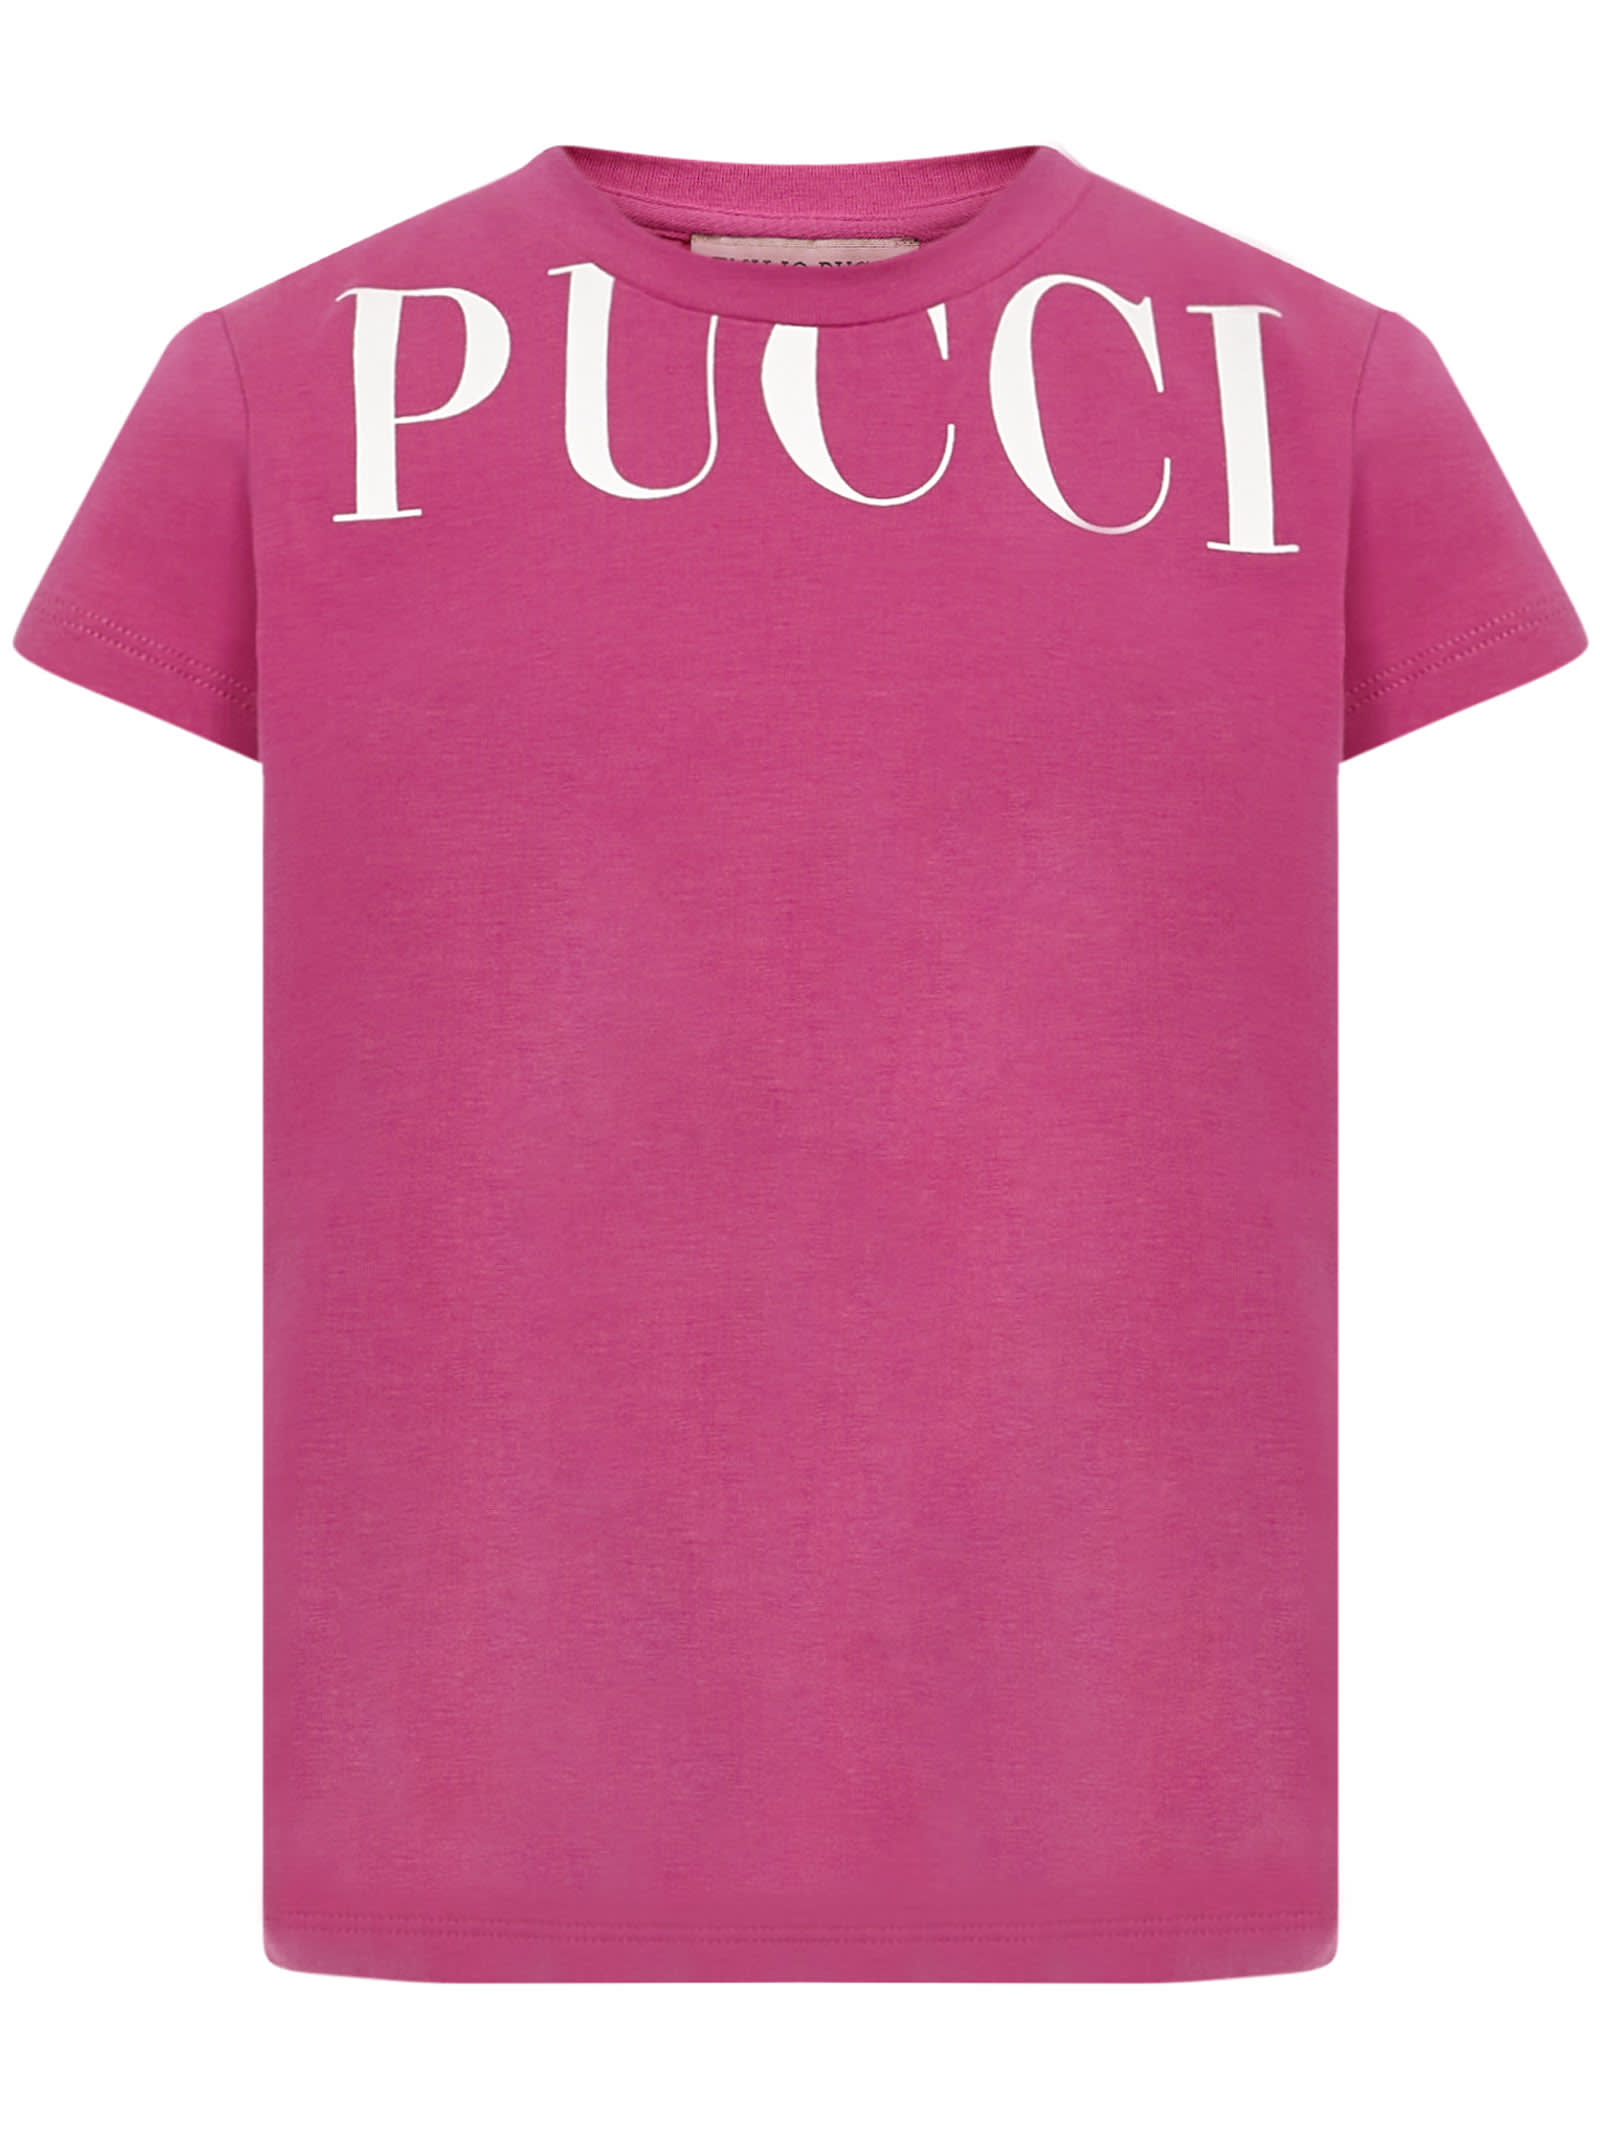 Emilio Pucci Kids T-shirt